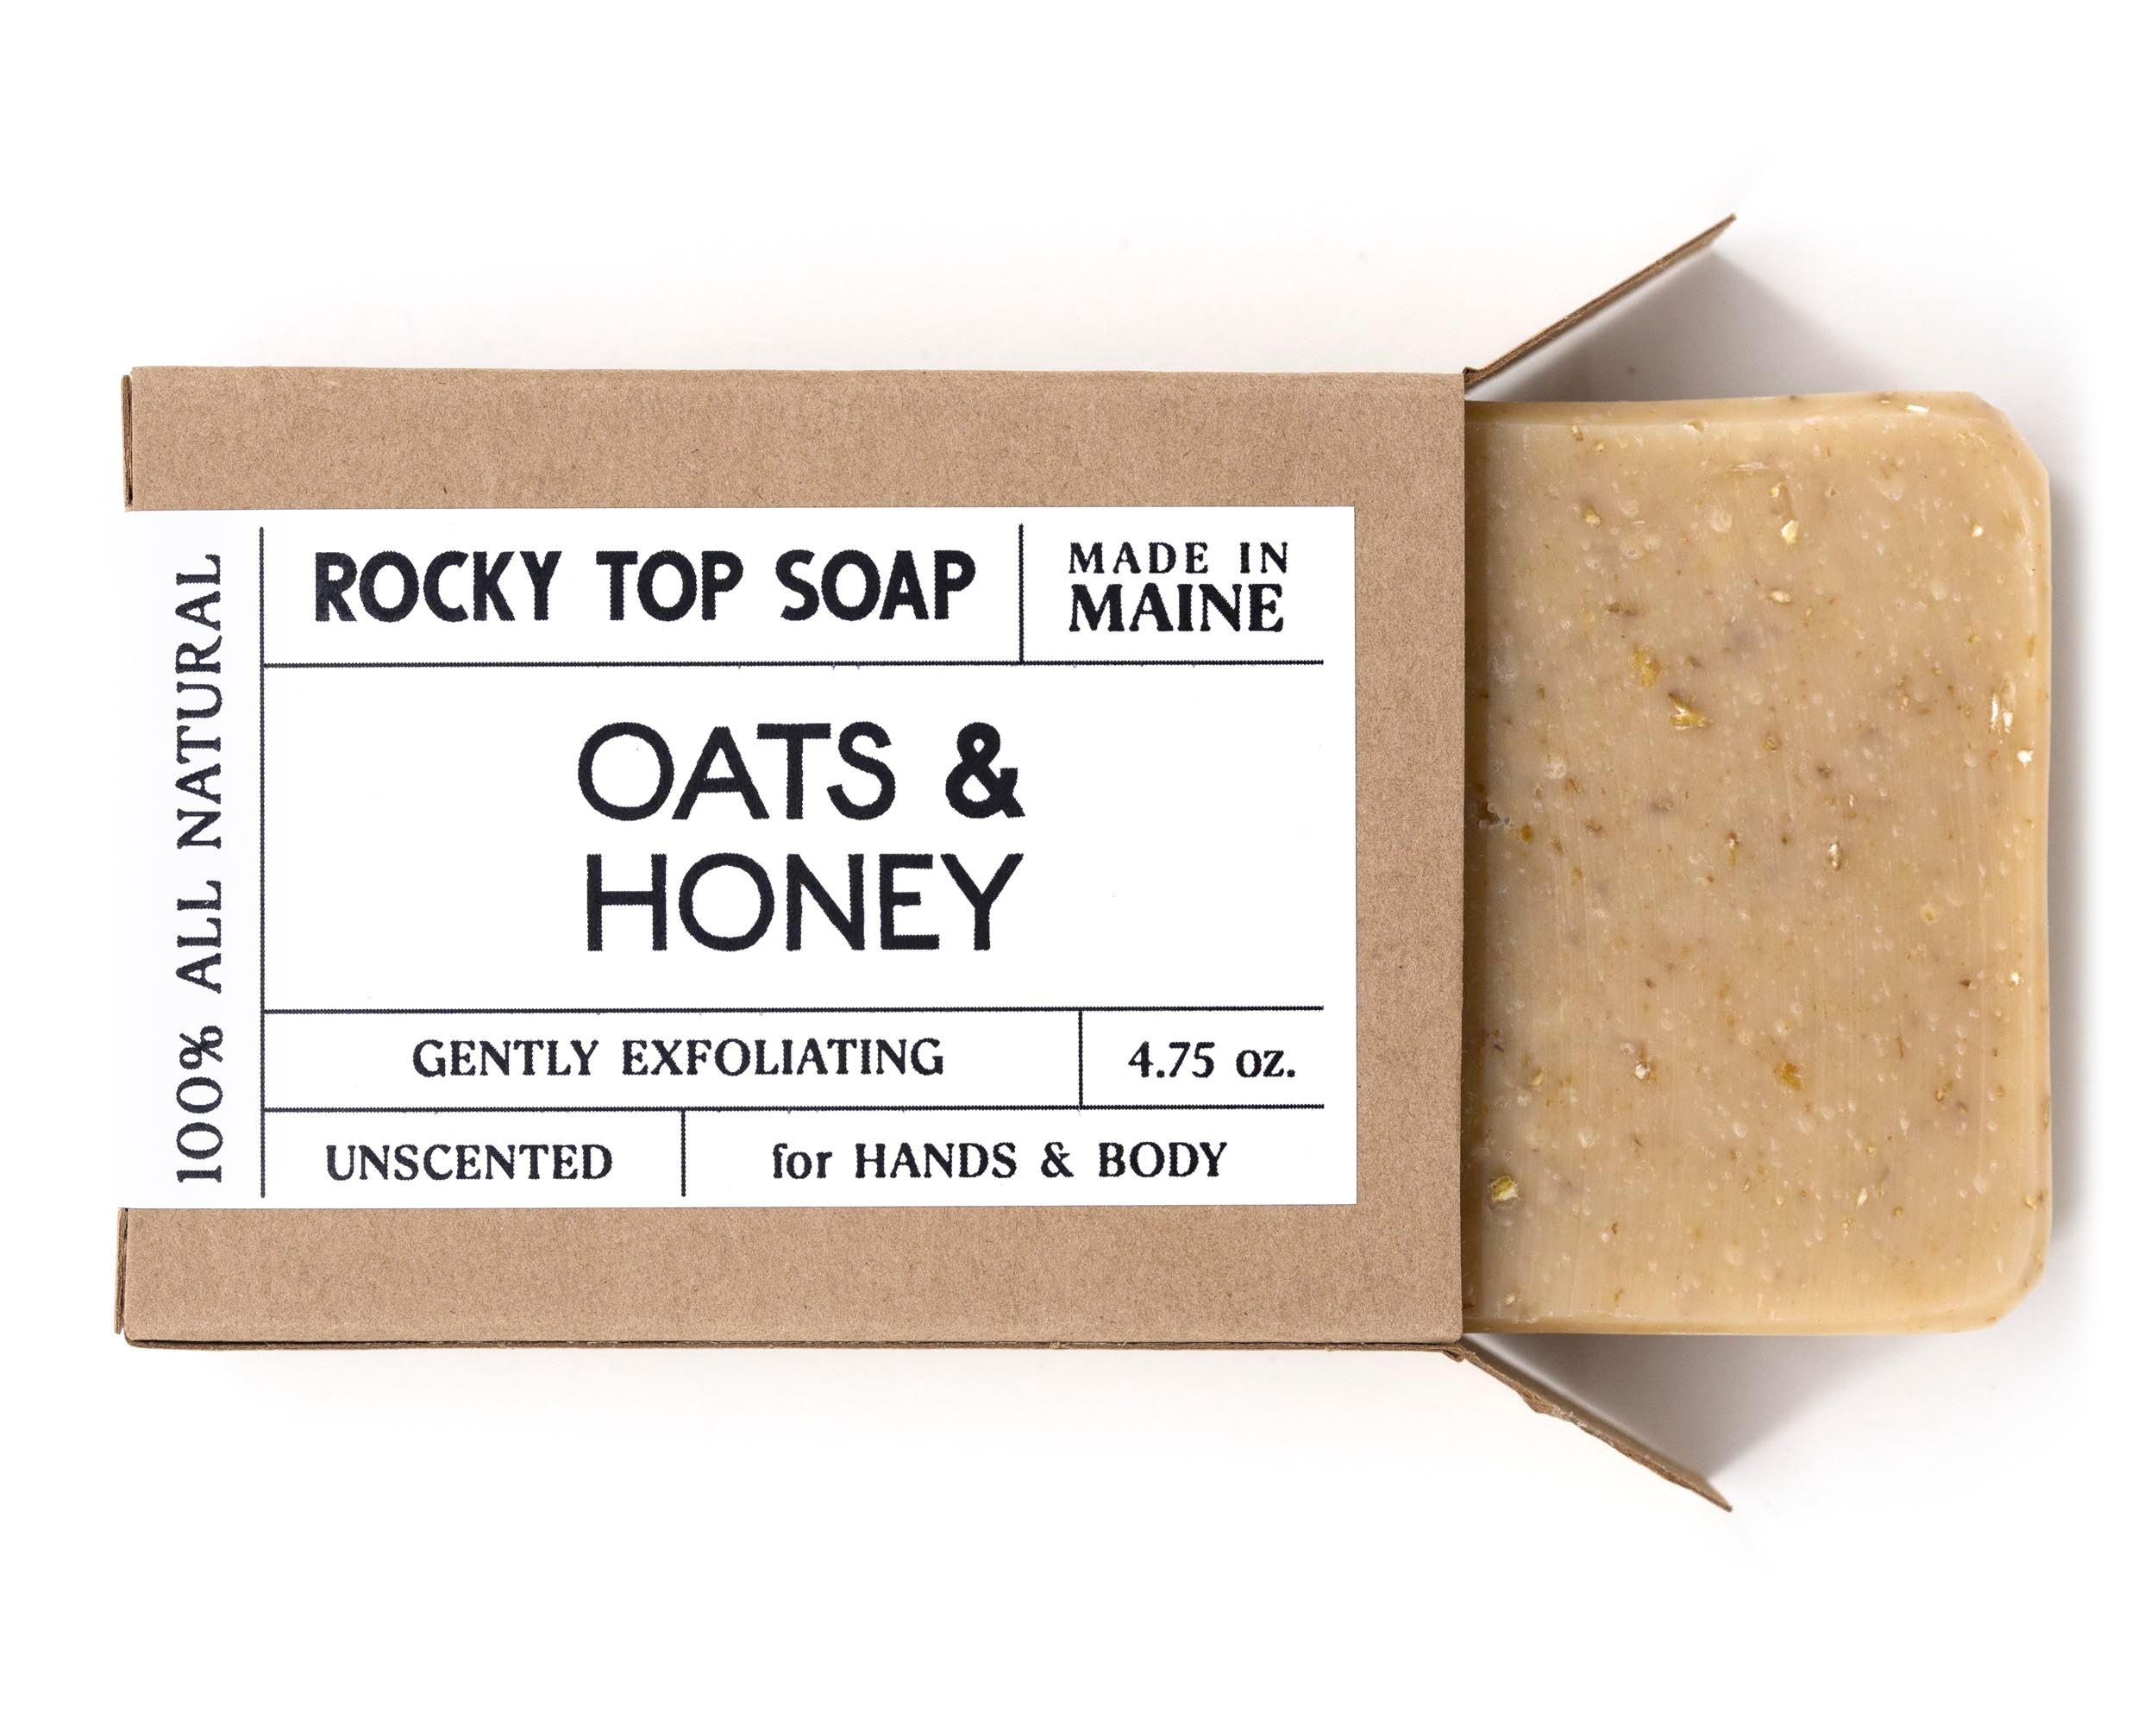 Oatmeal and Honey Soap